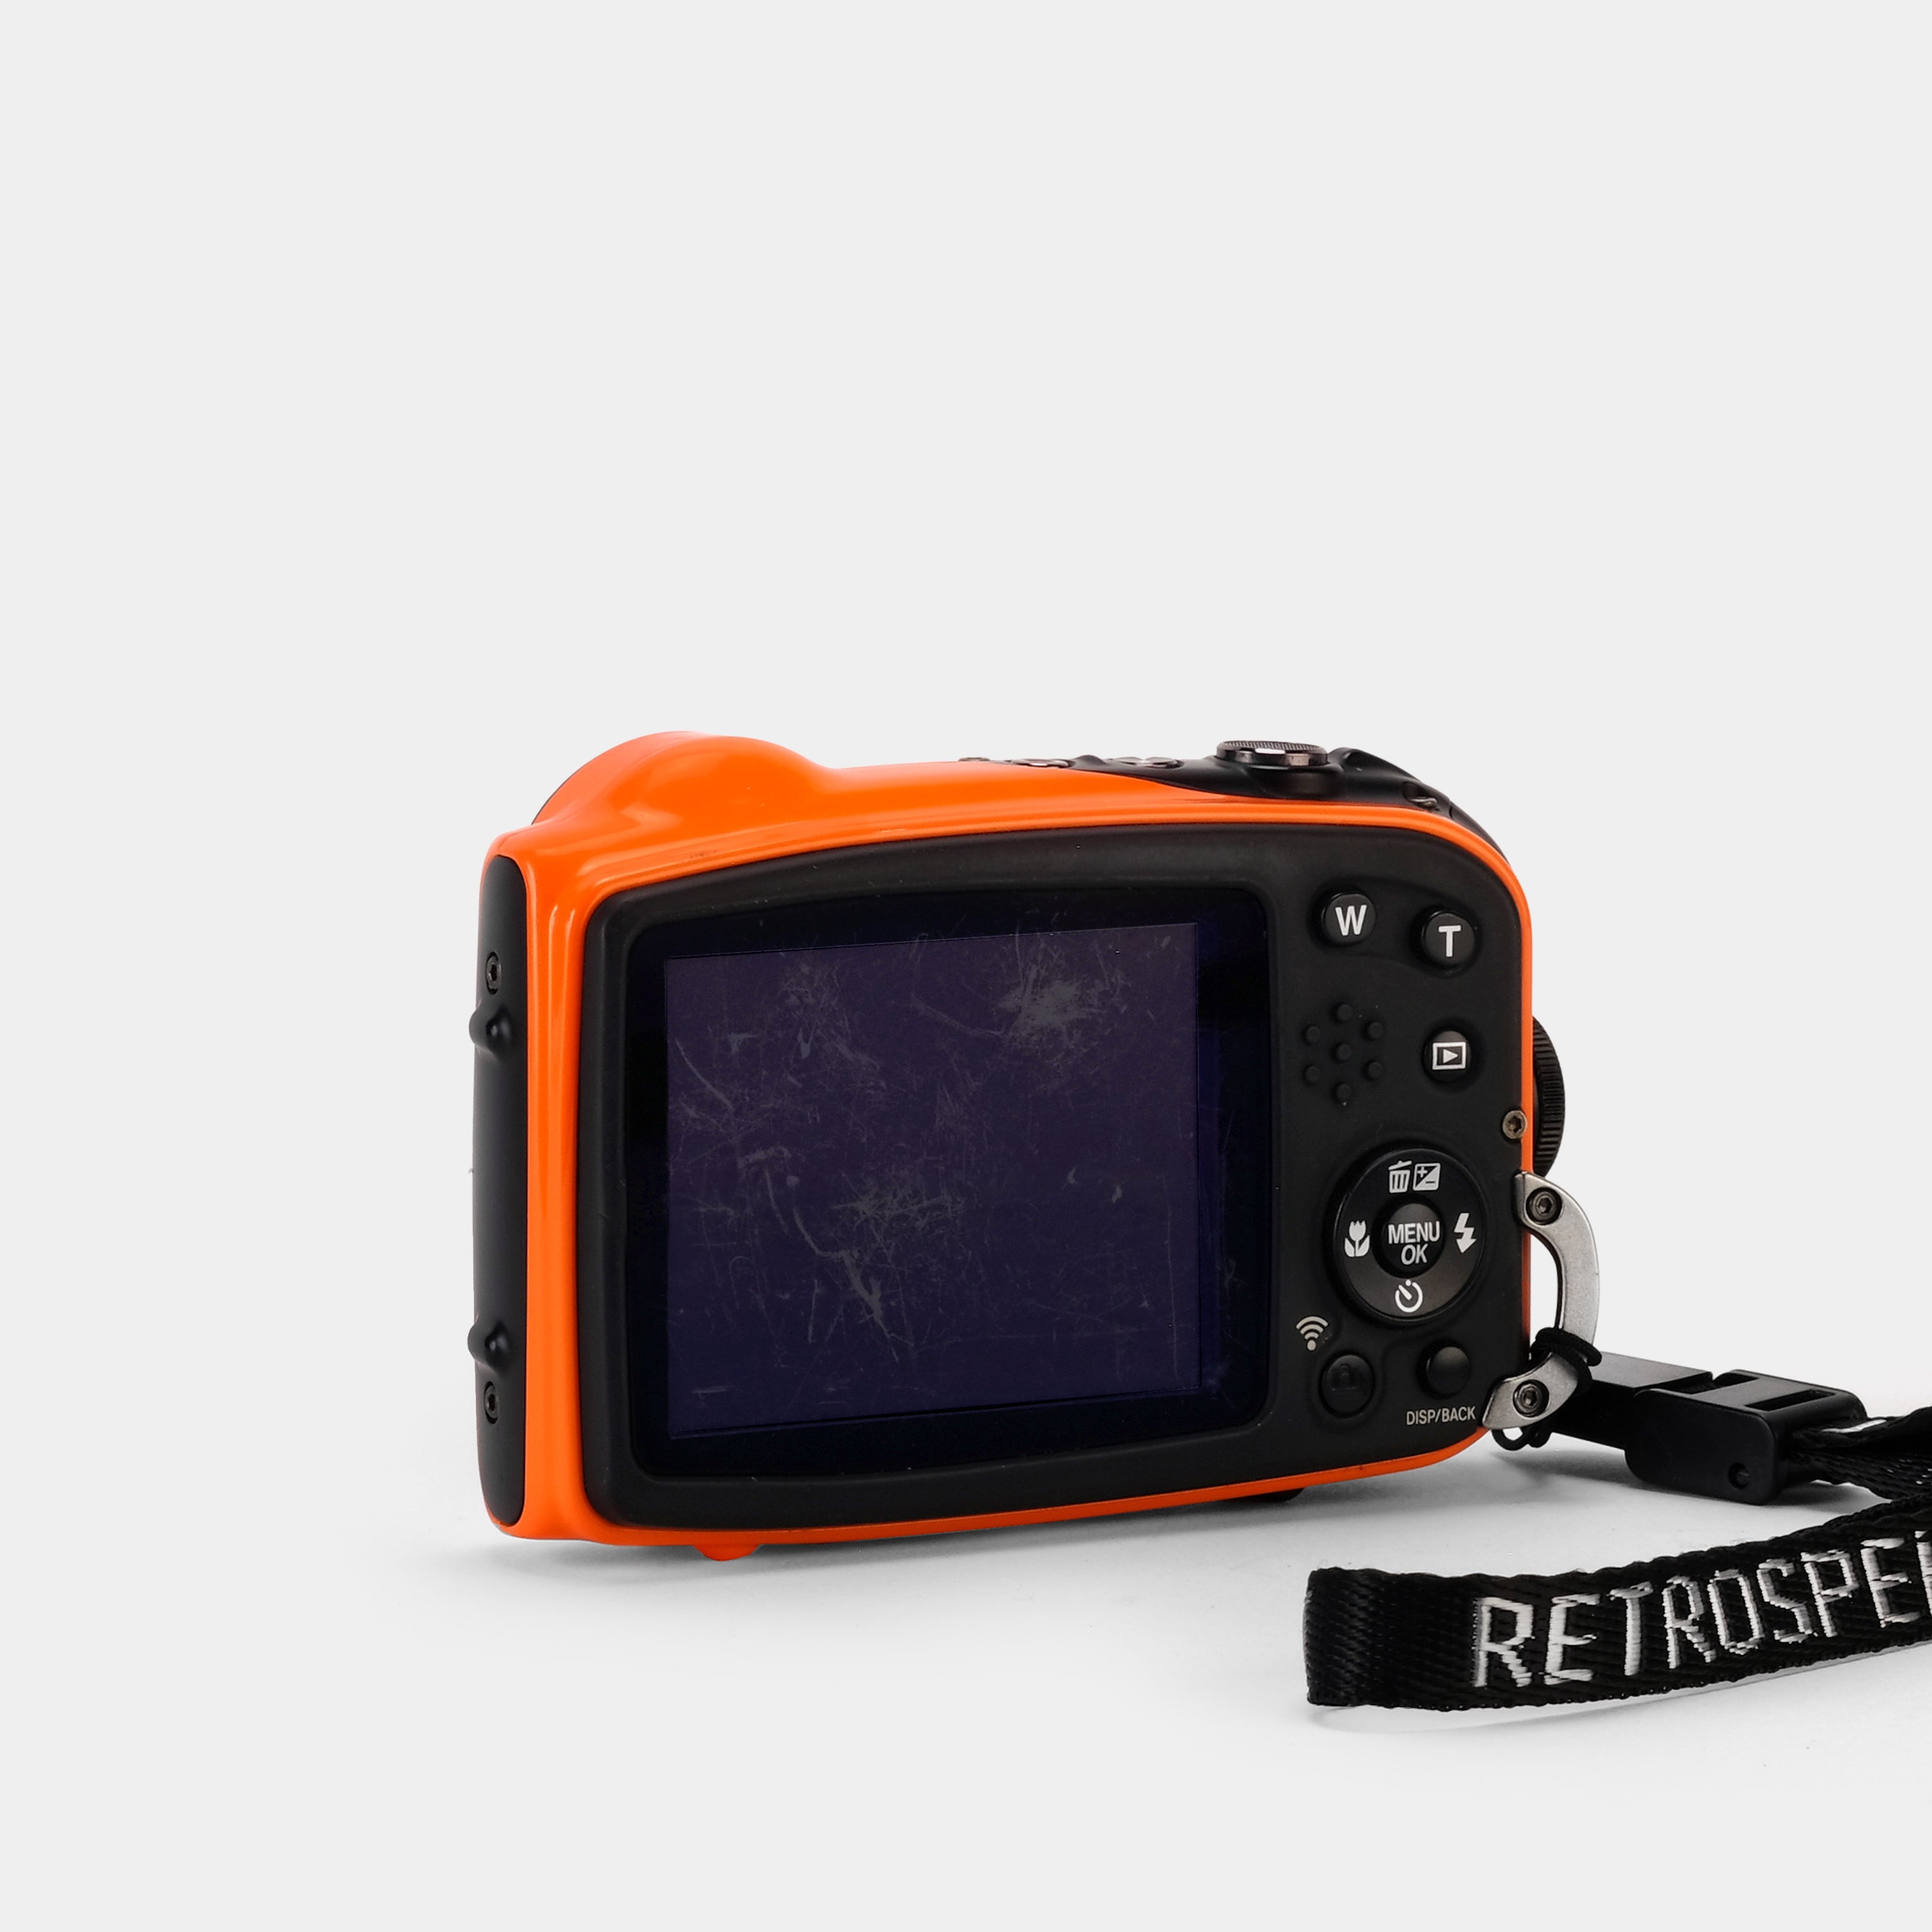 Fujifilm Finepix XP70 Orange Point and Shoot Digital Camera